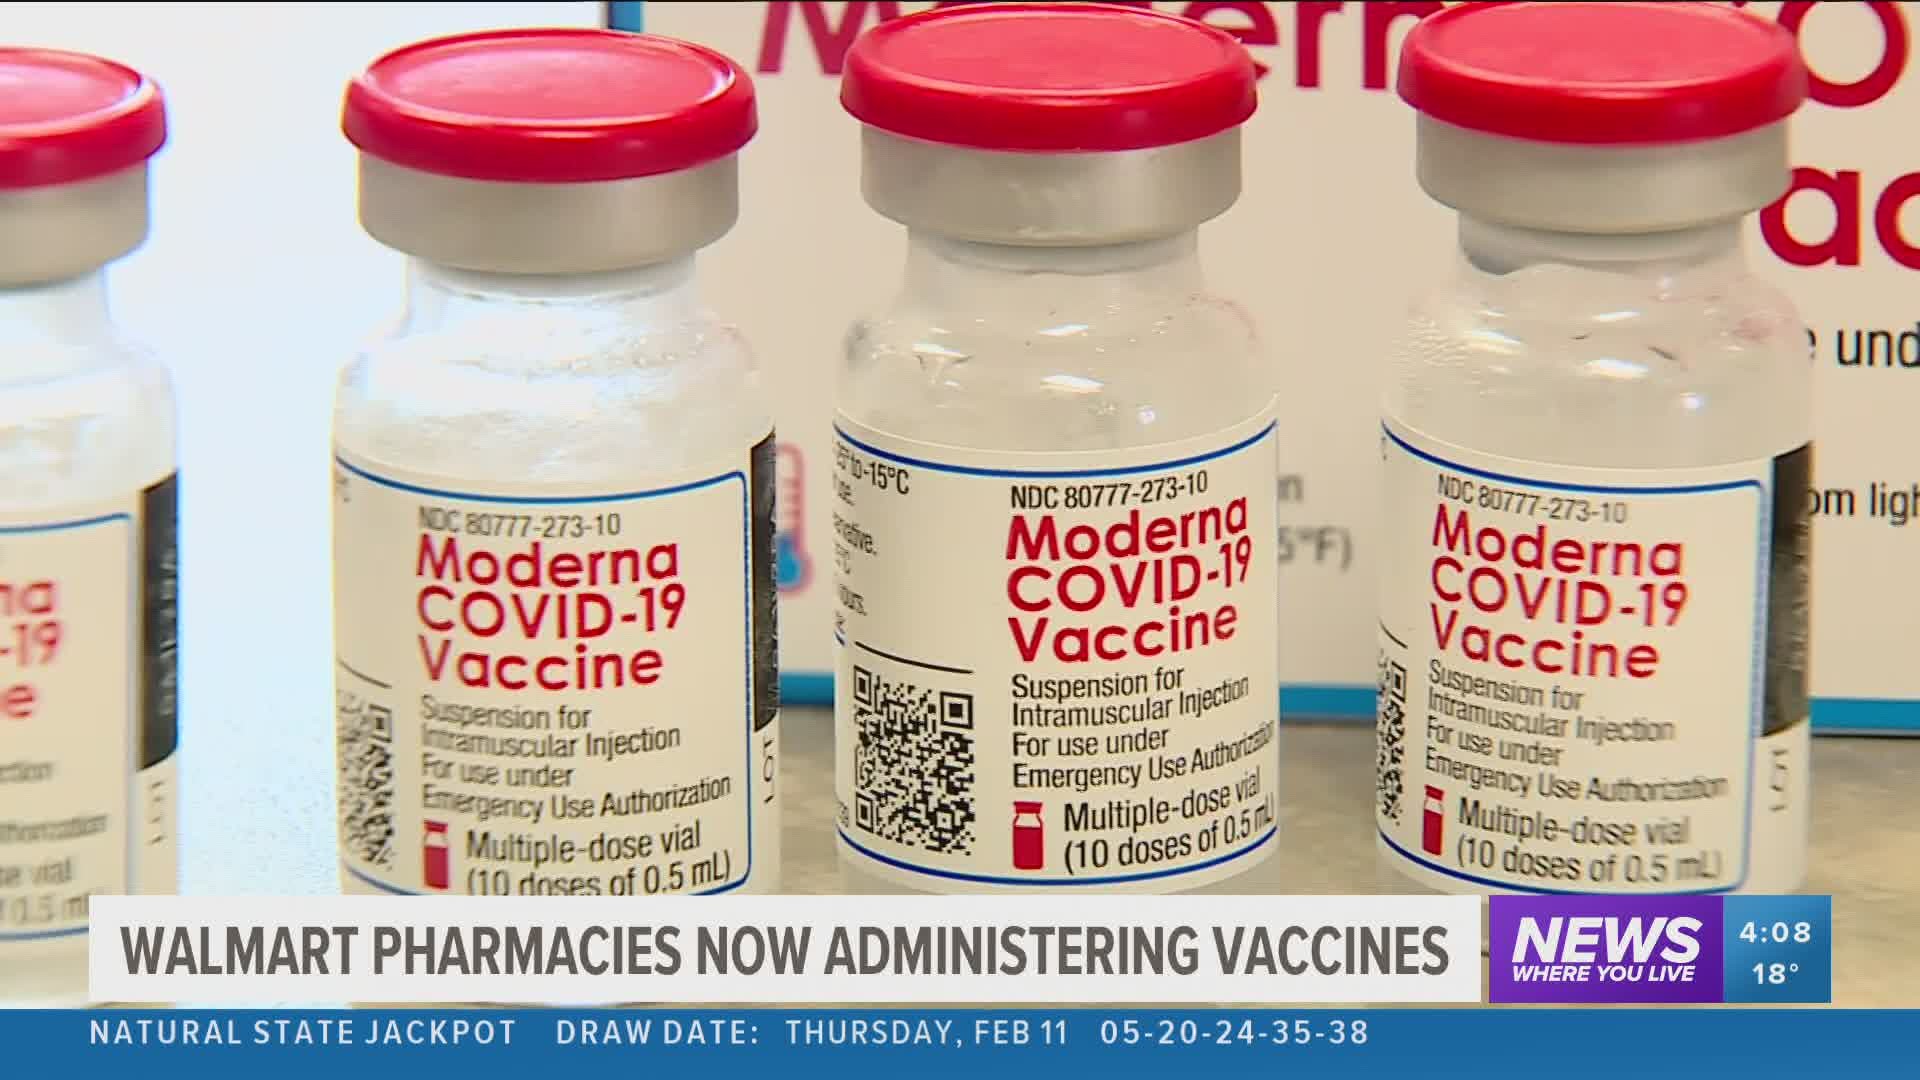 Walmart pharmacies now administering Covid-19 vaccines